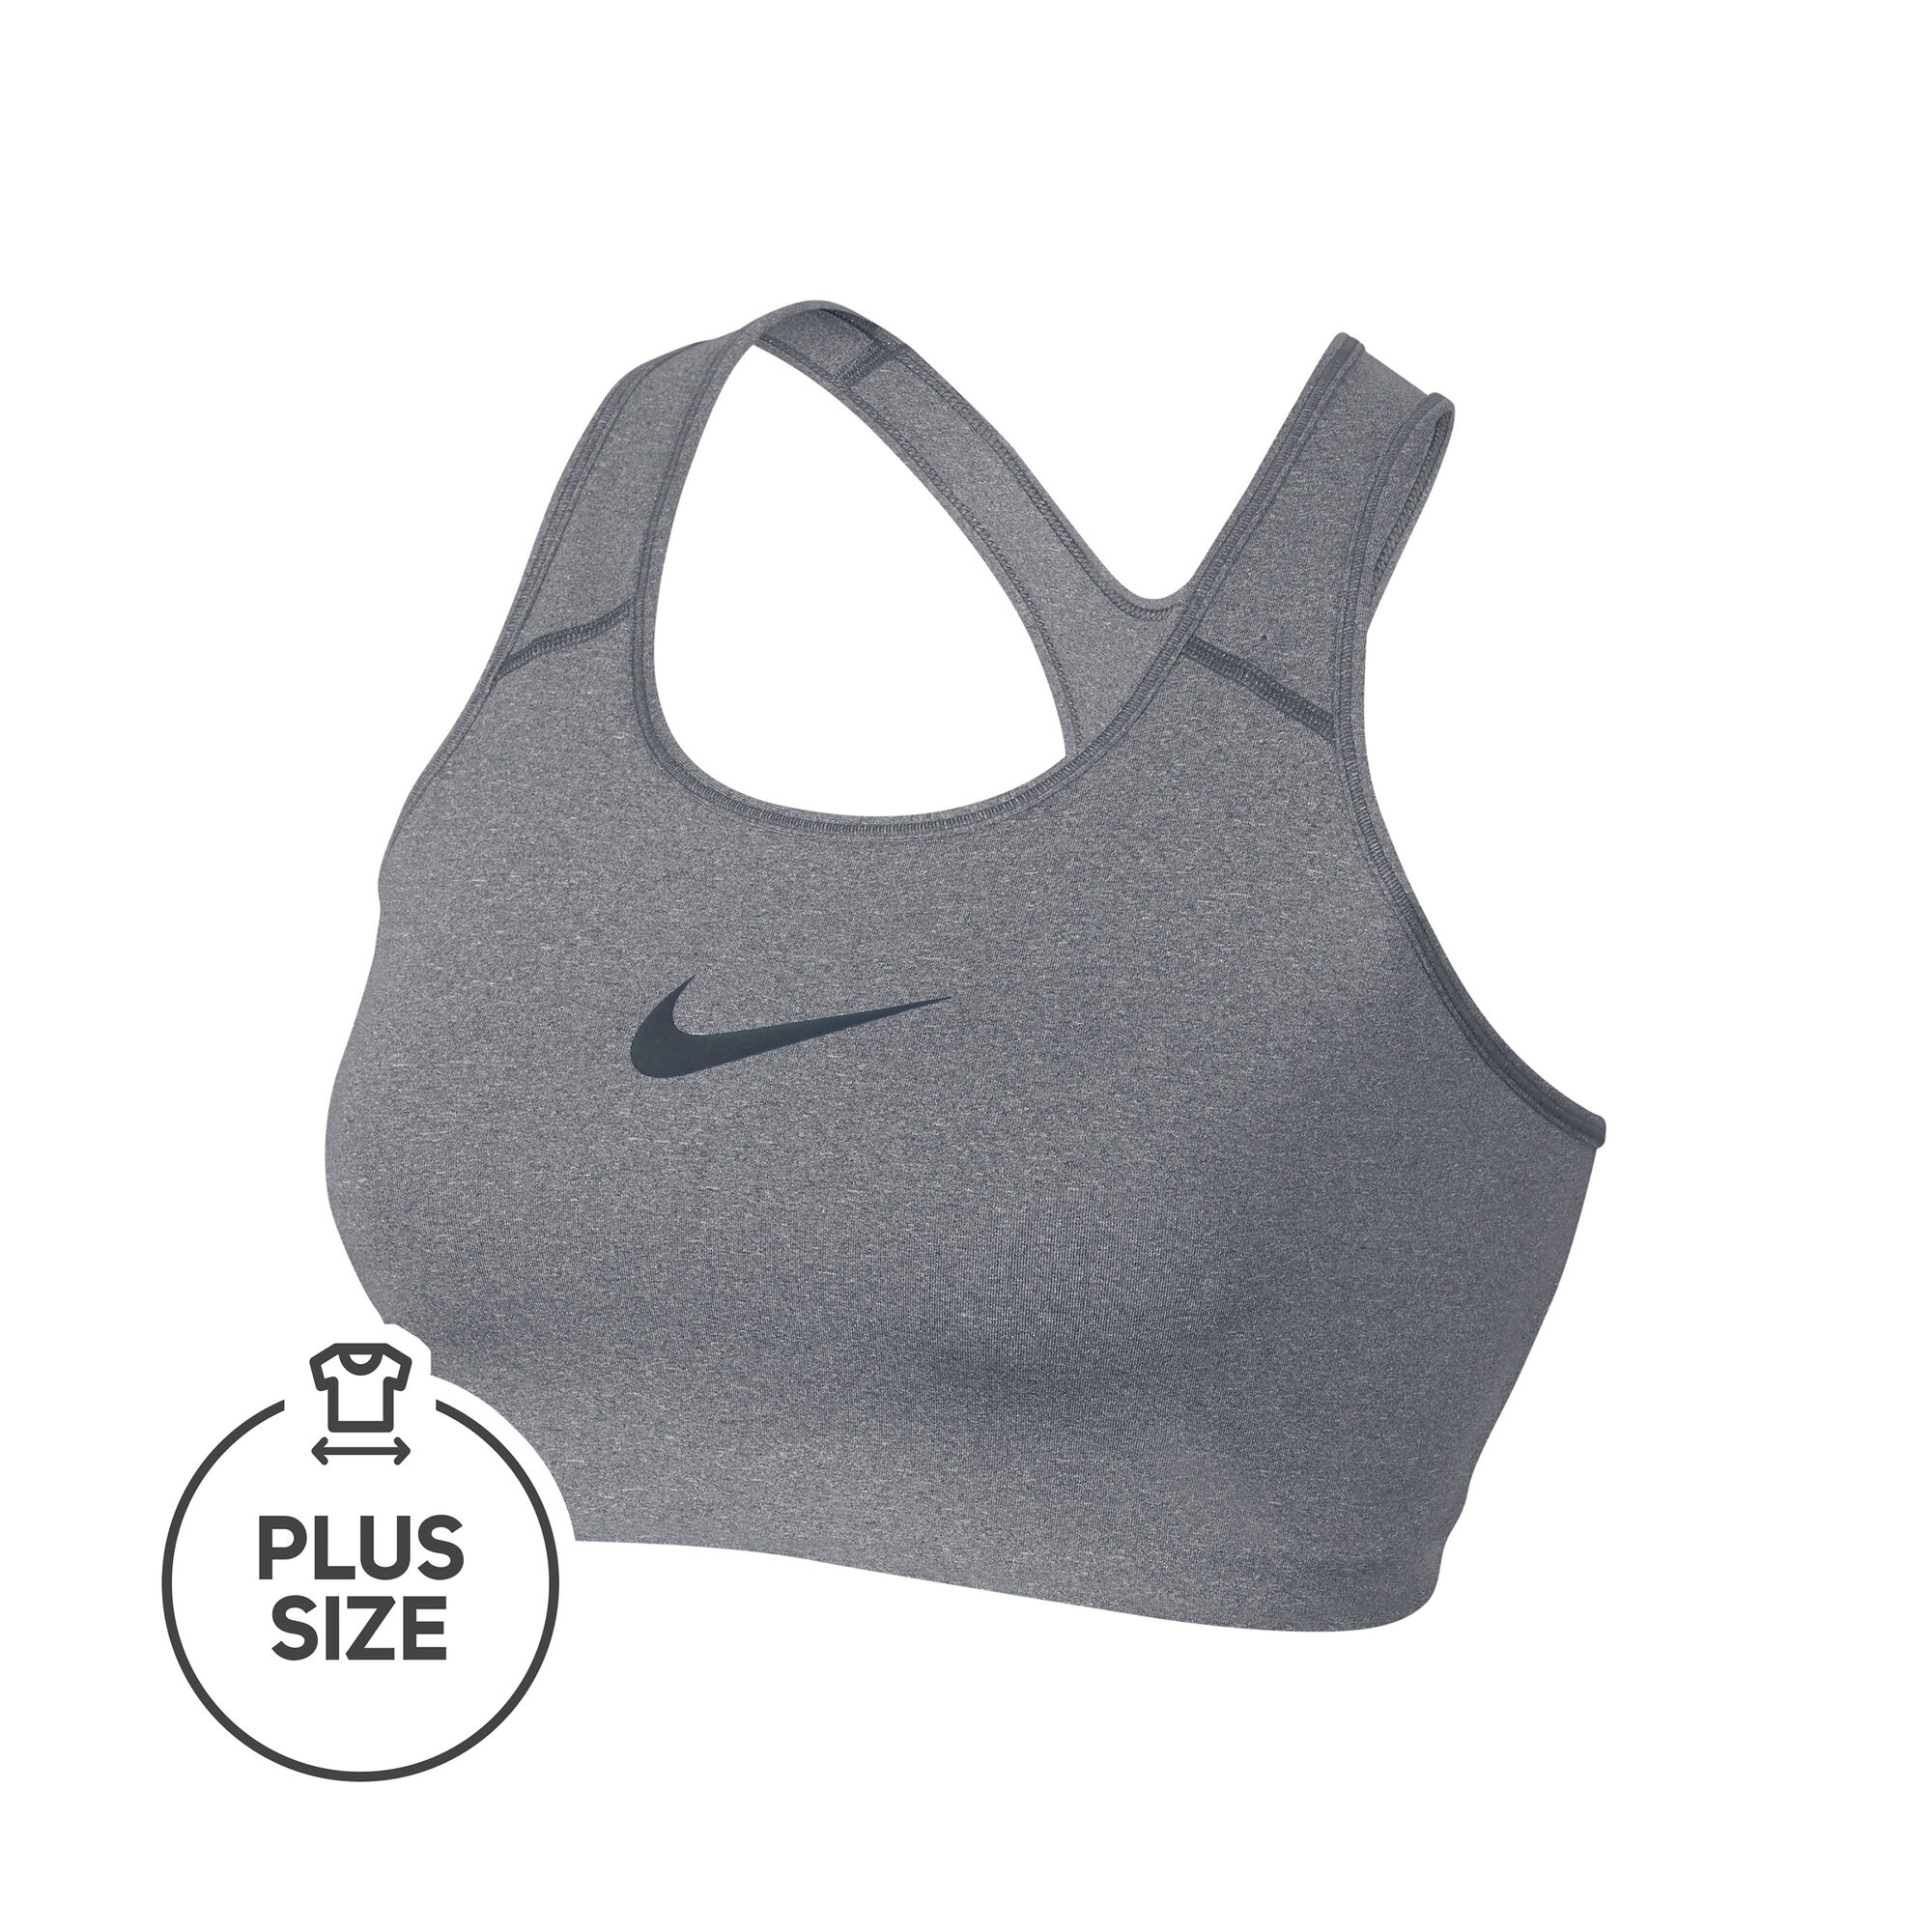 Buy Nike Plus Size Sports Bras Women Dark Grey, Black online